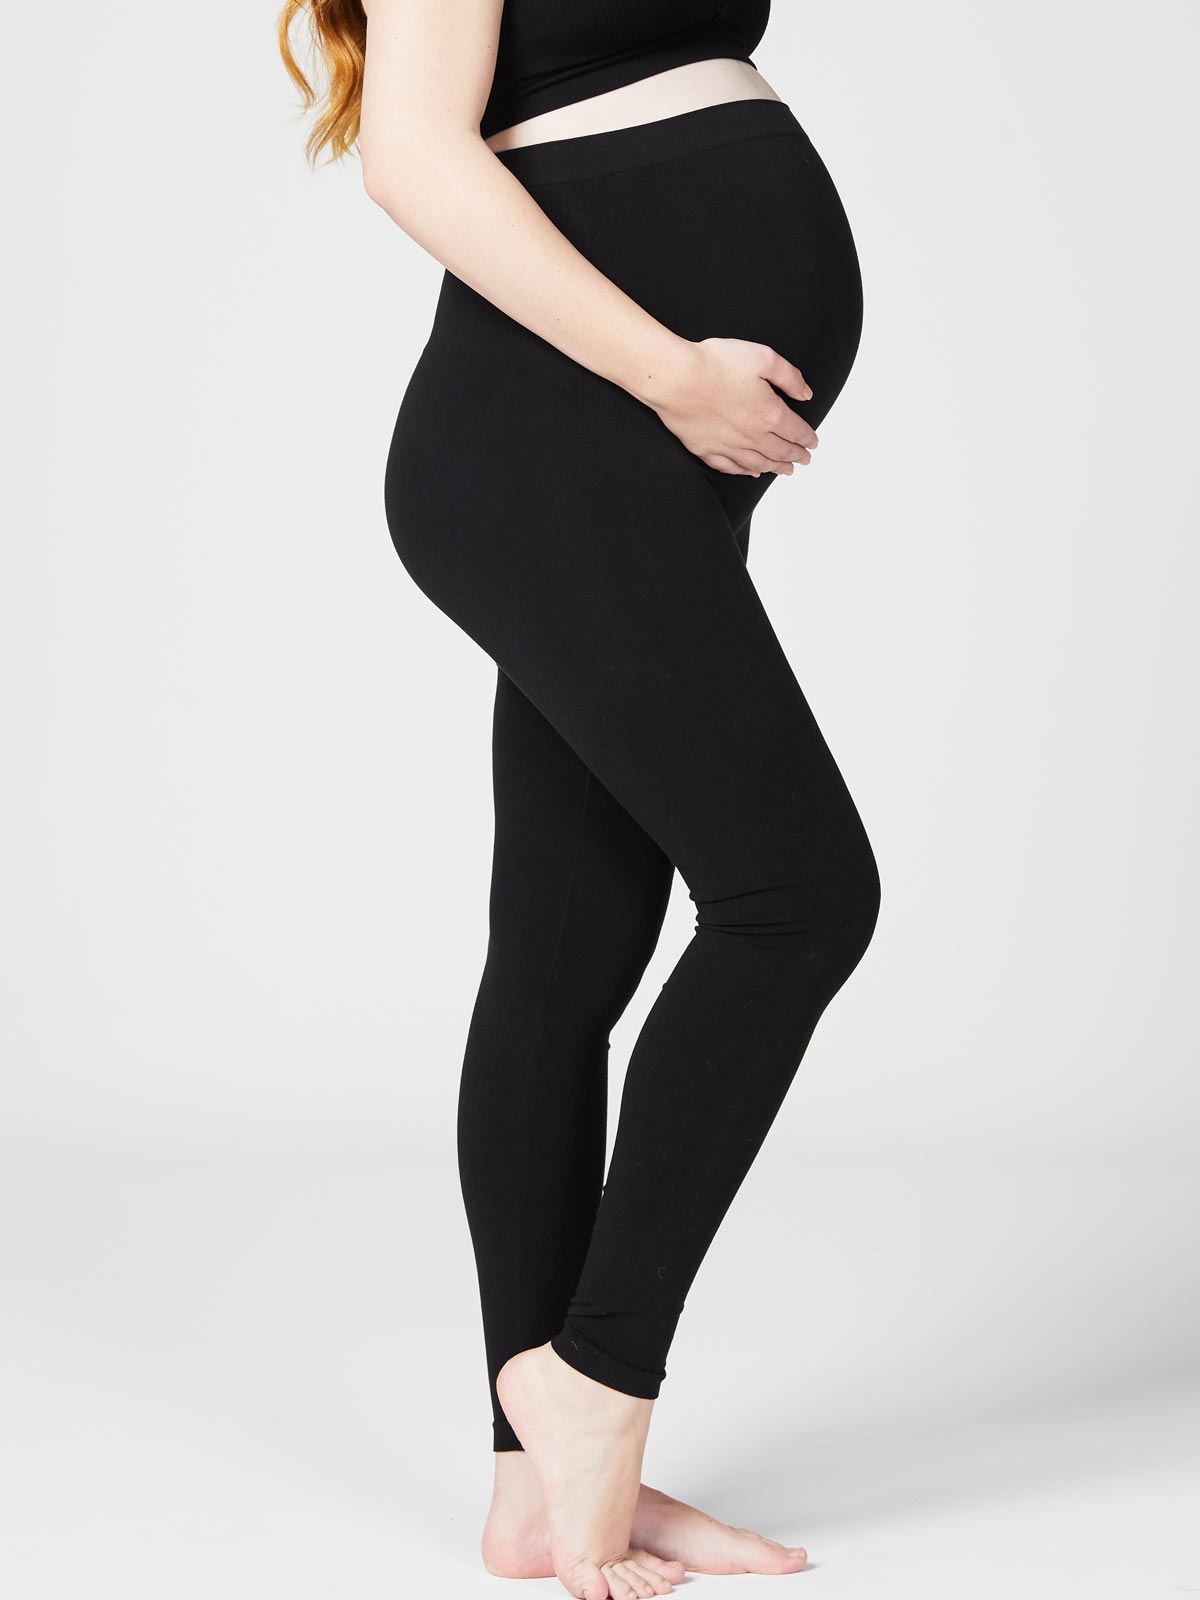 L Thyme Maternity Leggings in Black